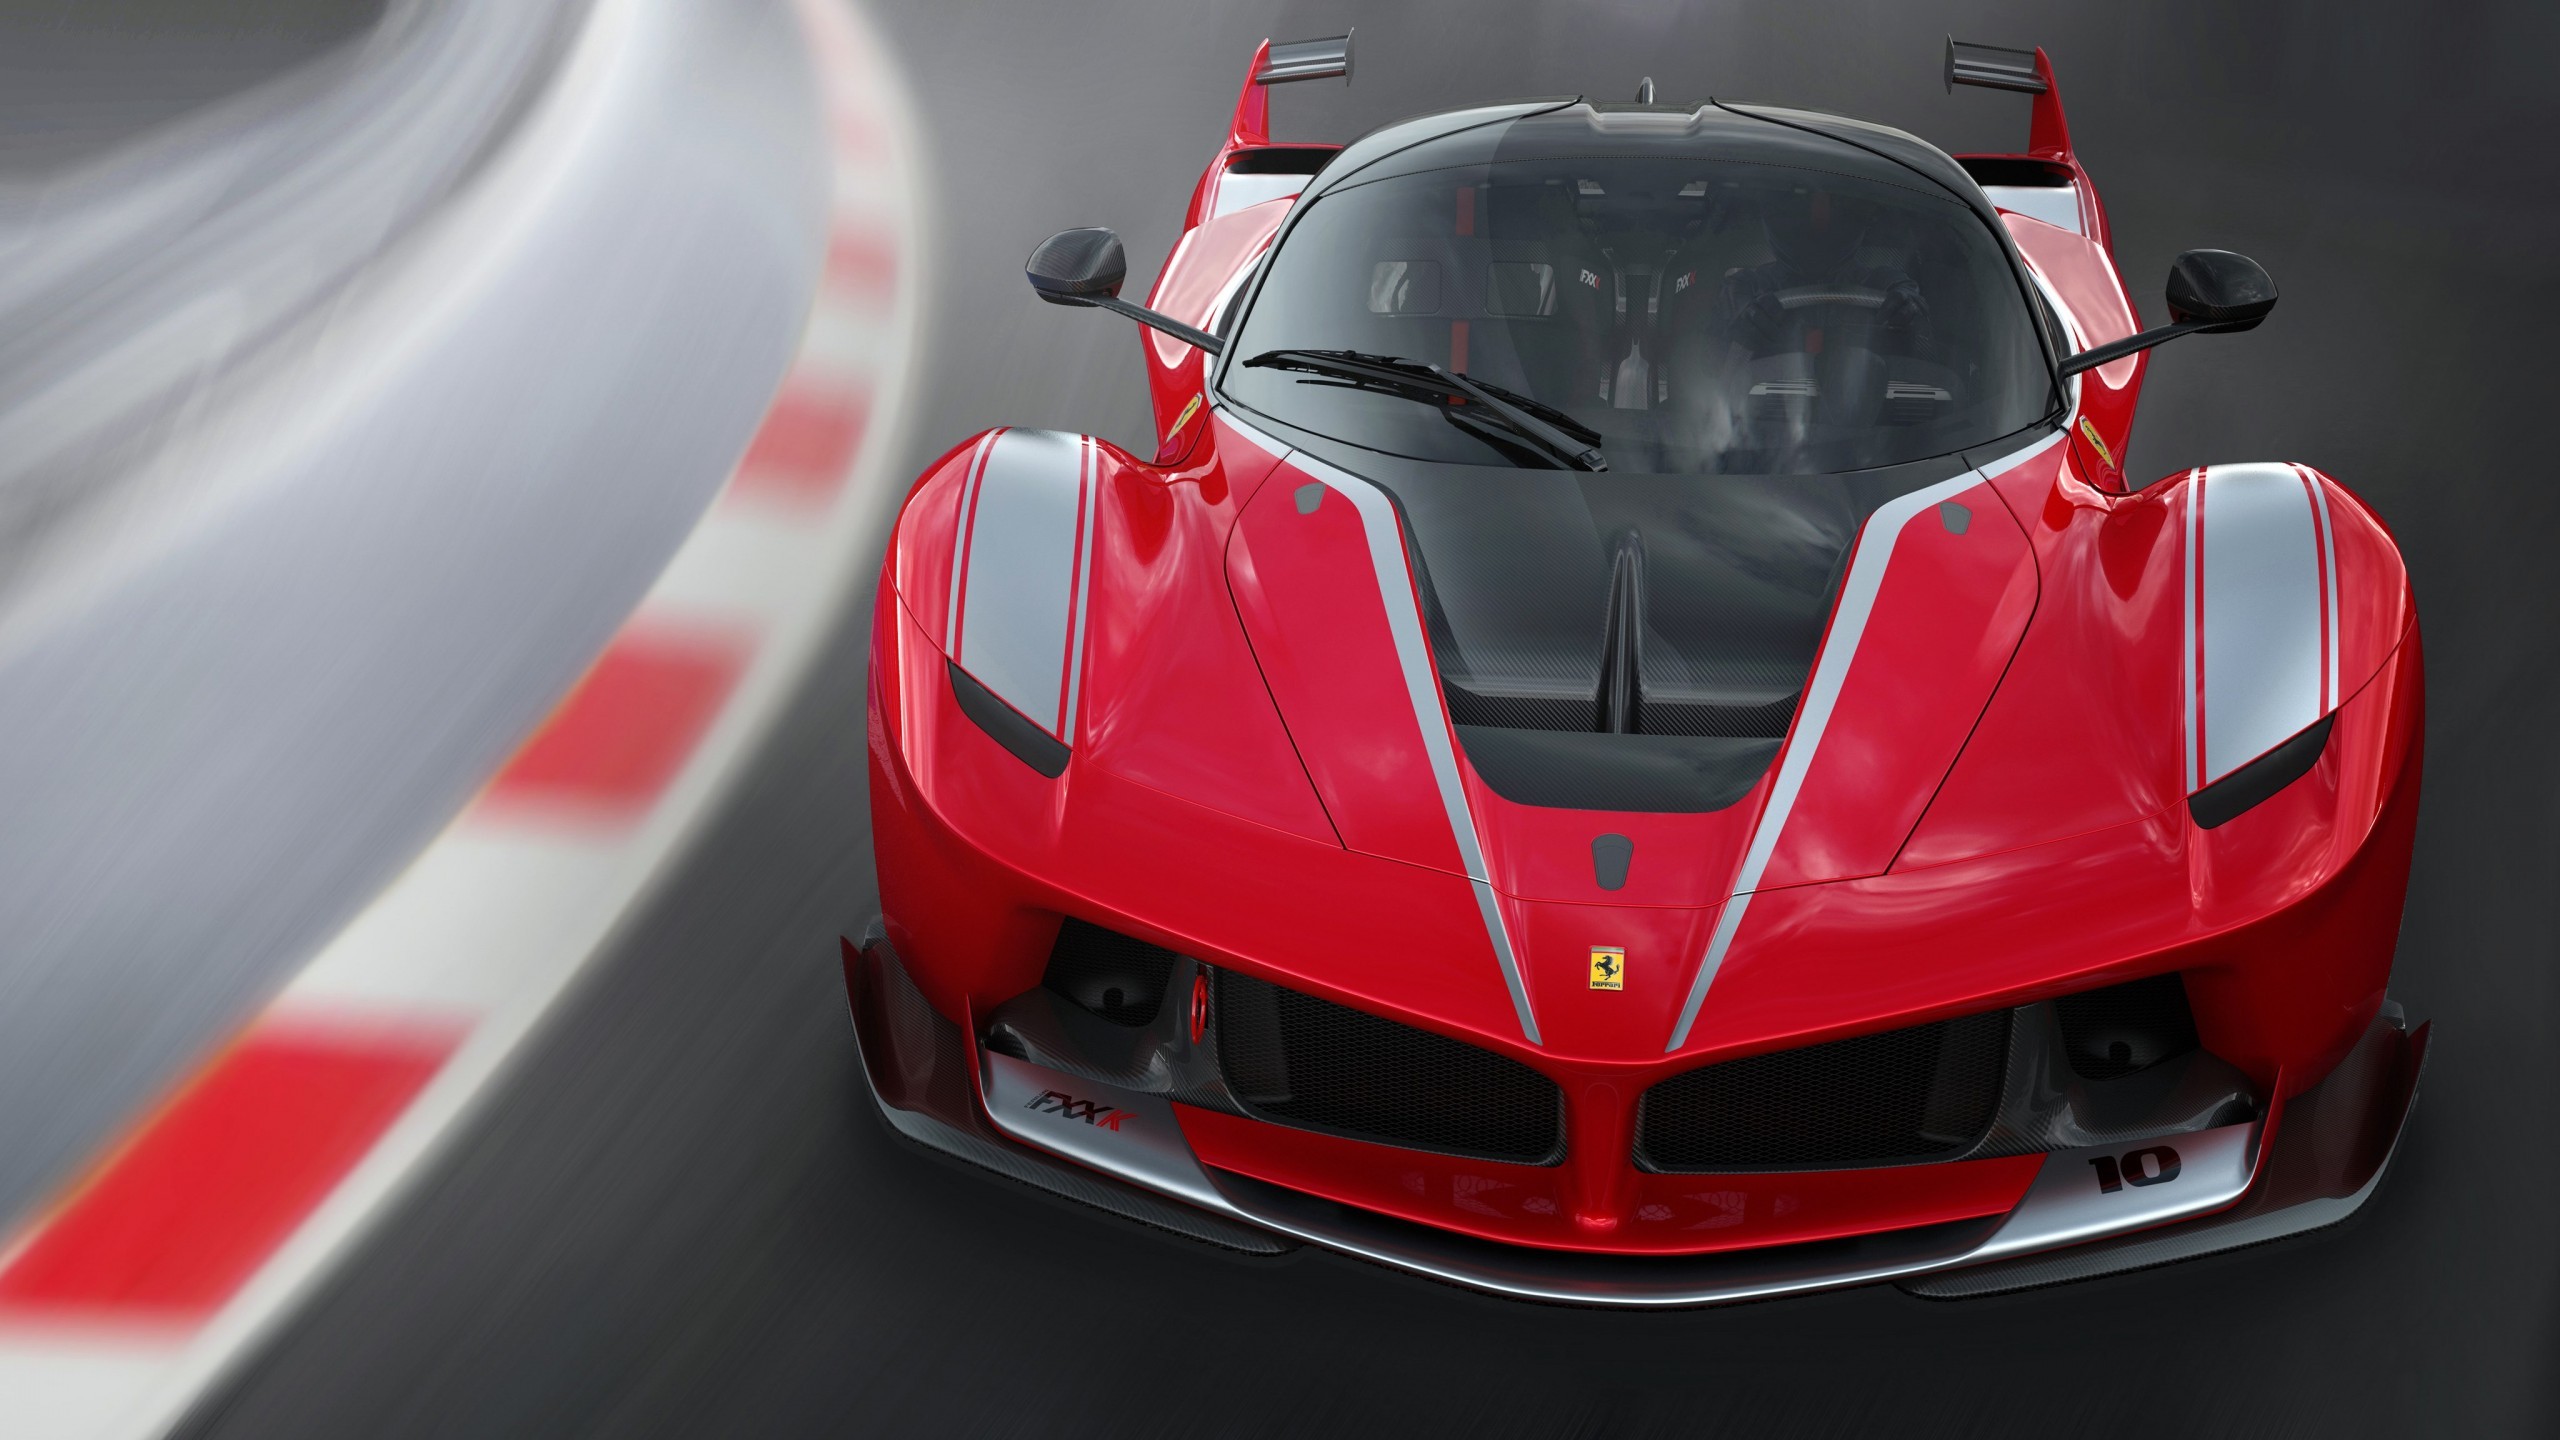 2560x1440 Automotive / Cars / Ferrari FXX K Wallpaper